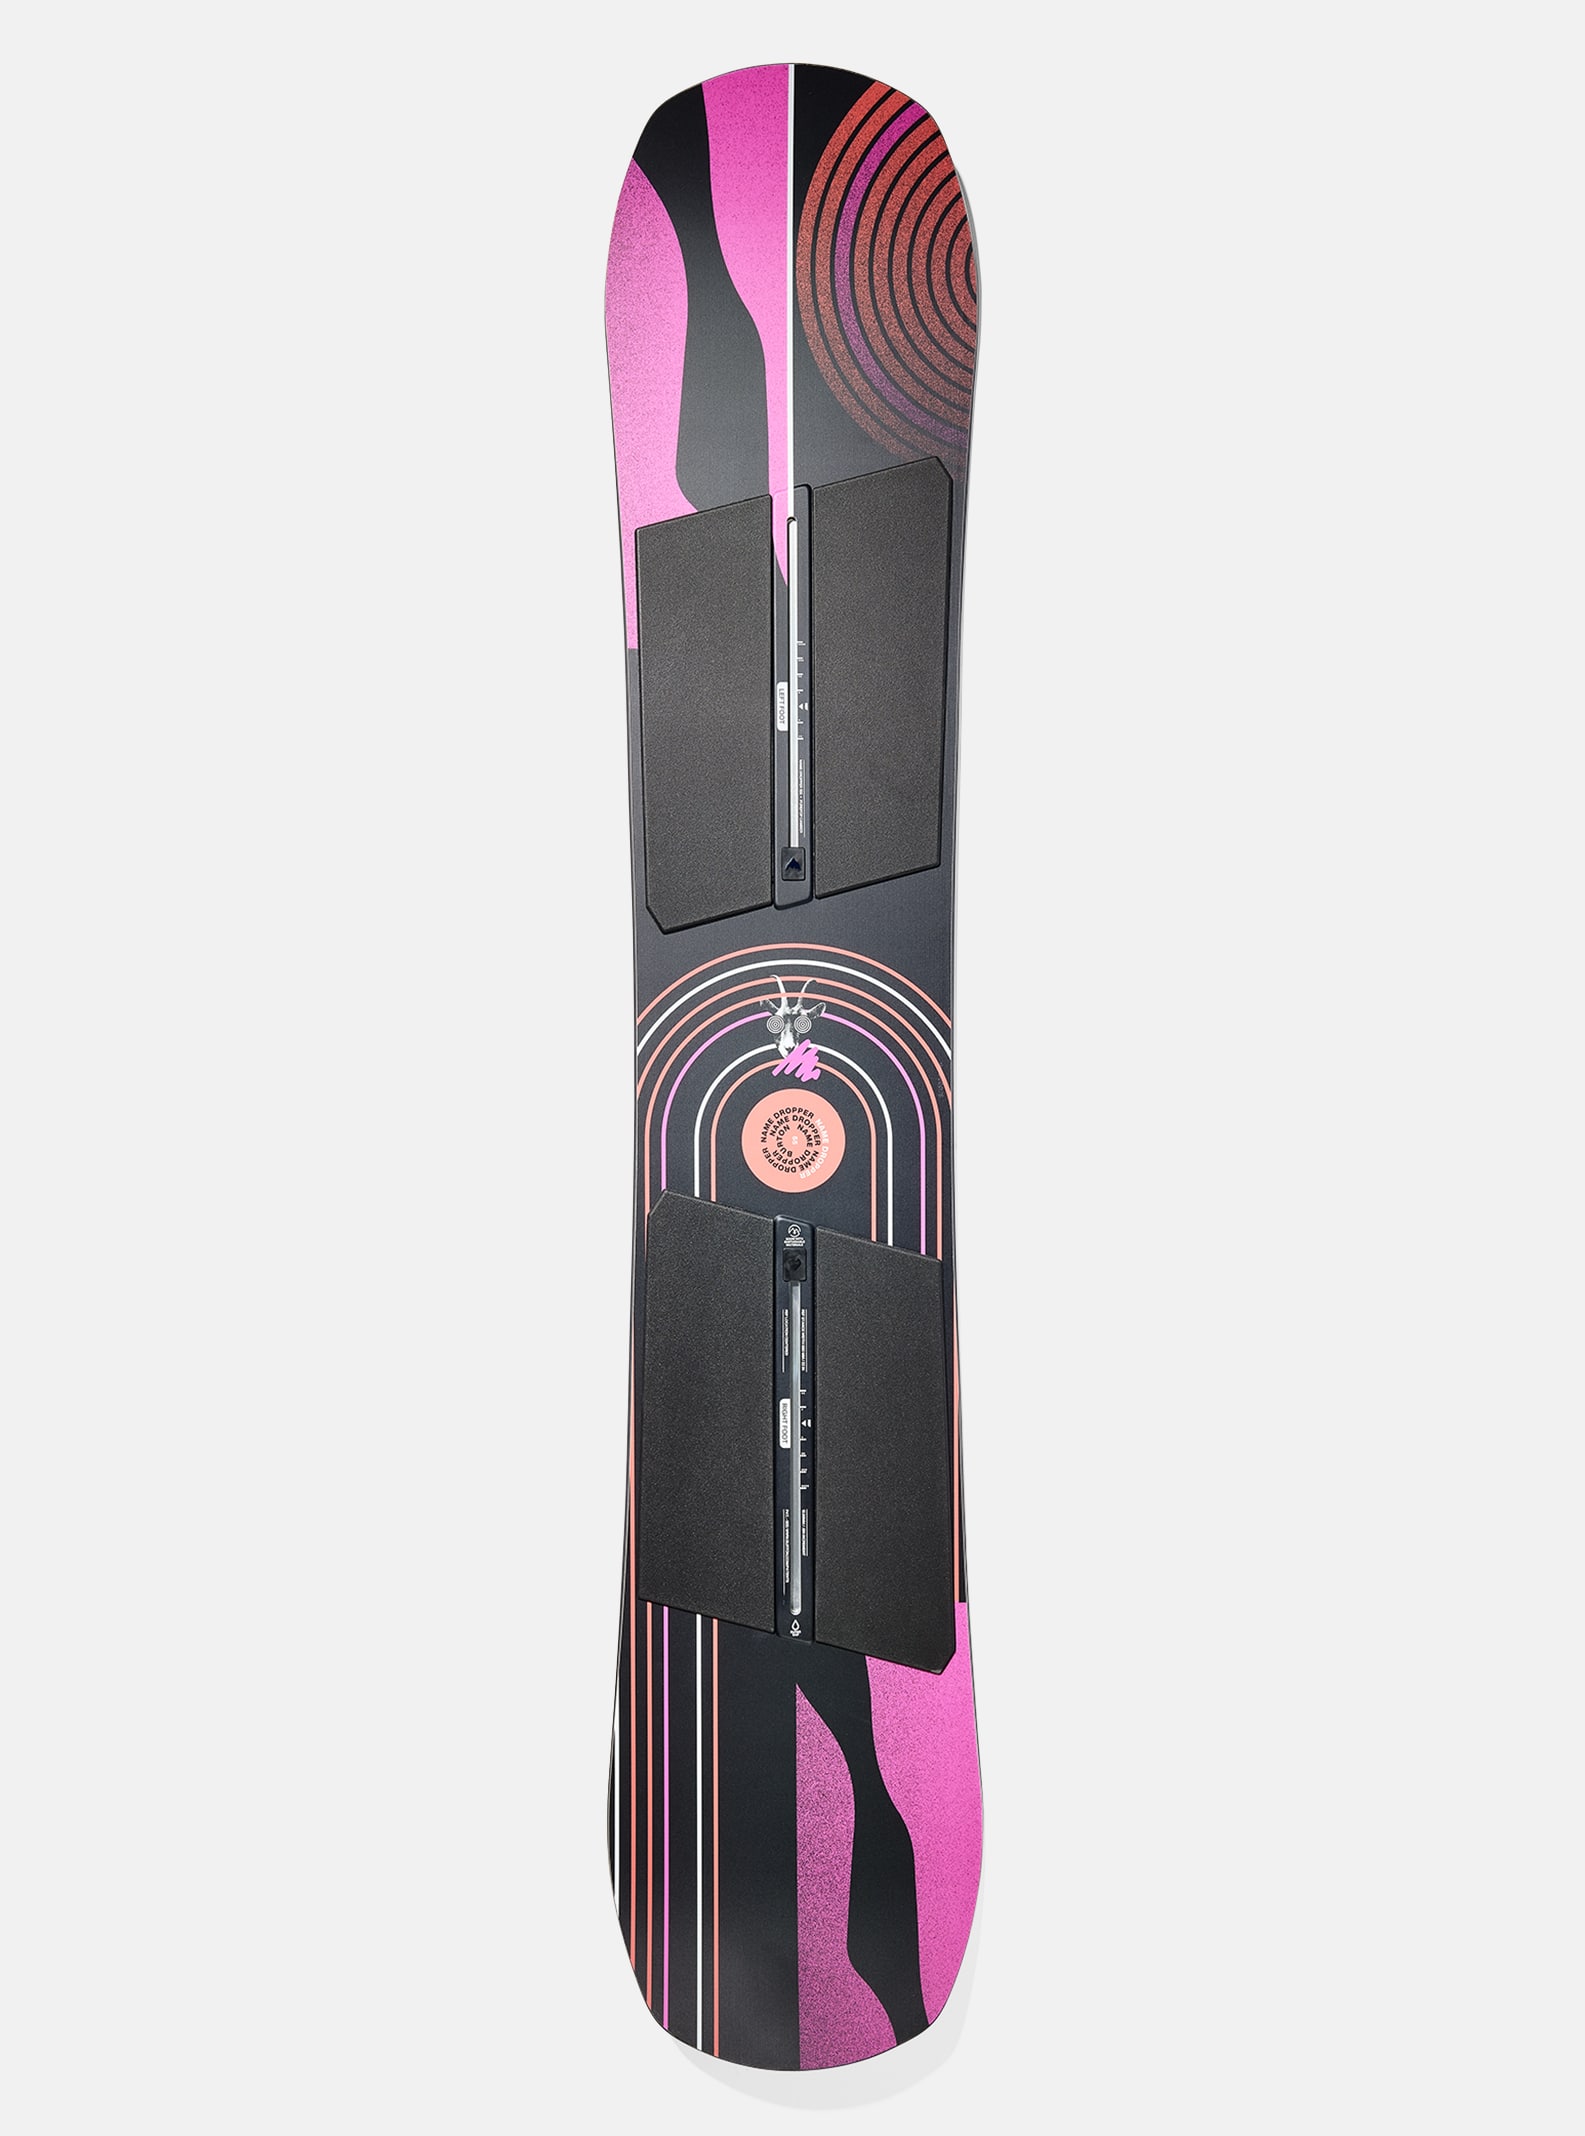 Looking for white neon snowboard : r/AdoptMeRBX